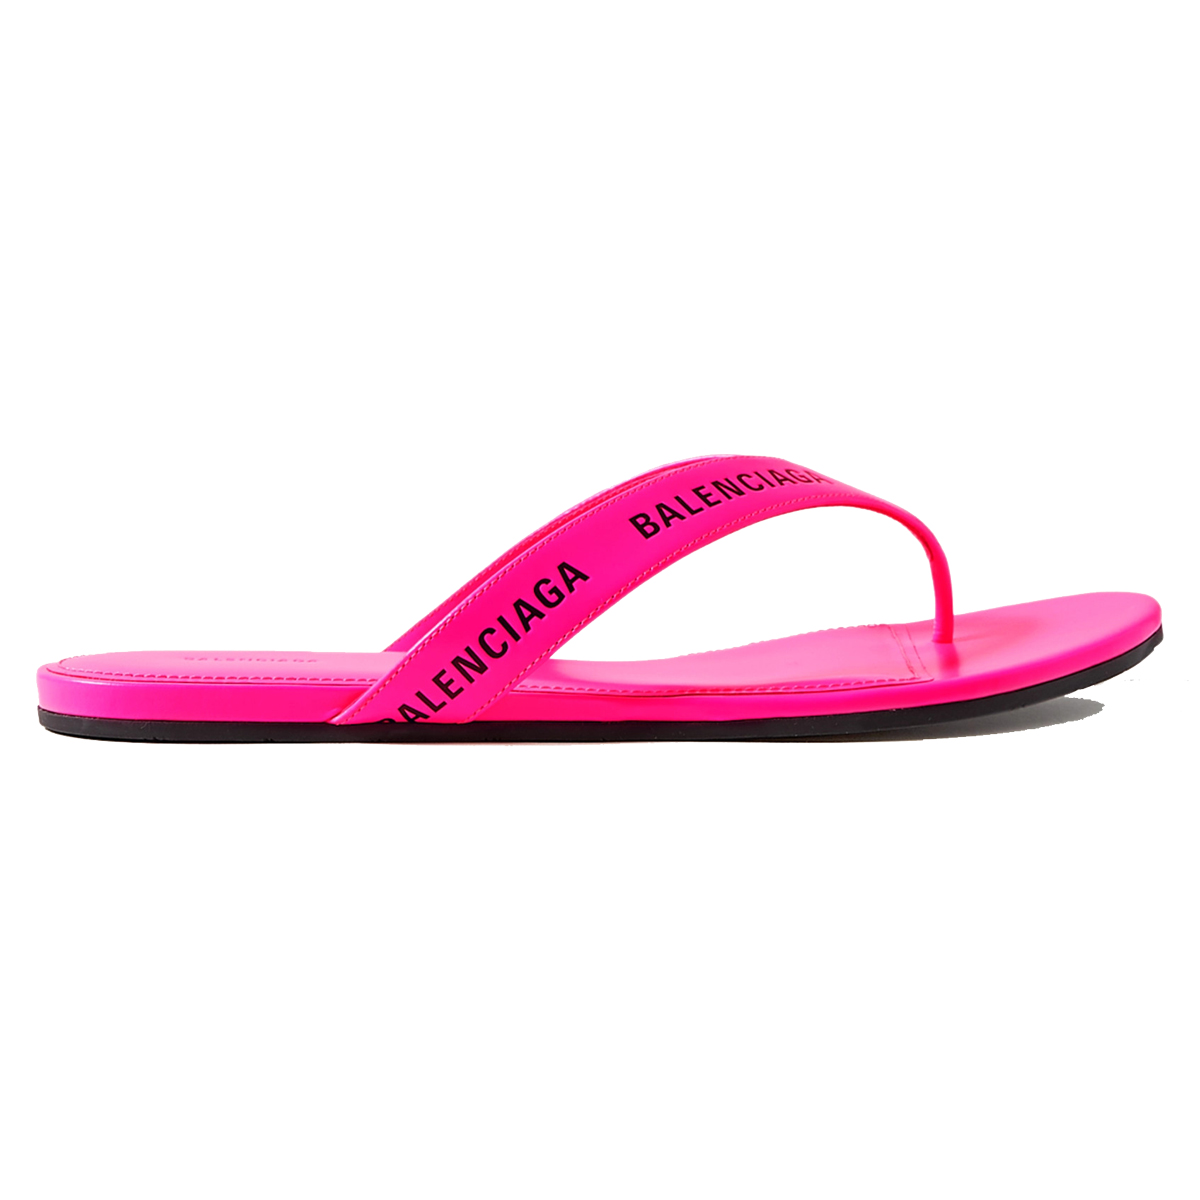 Shop Stylish Flip Flops for Summer - Coveteur